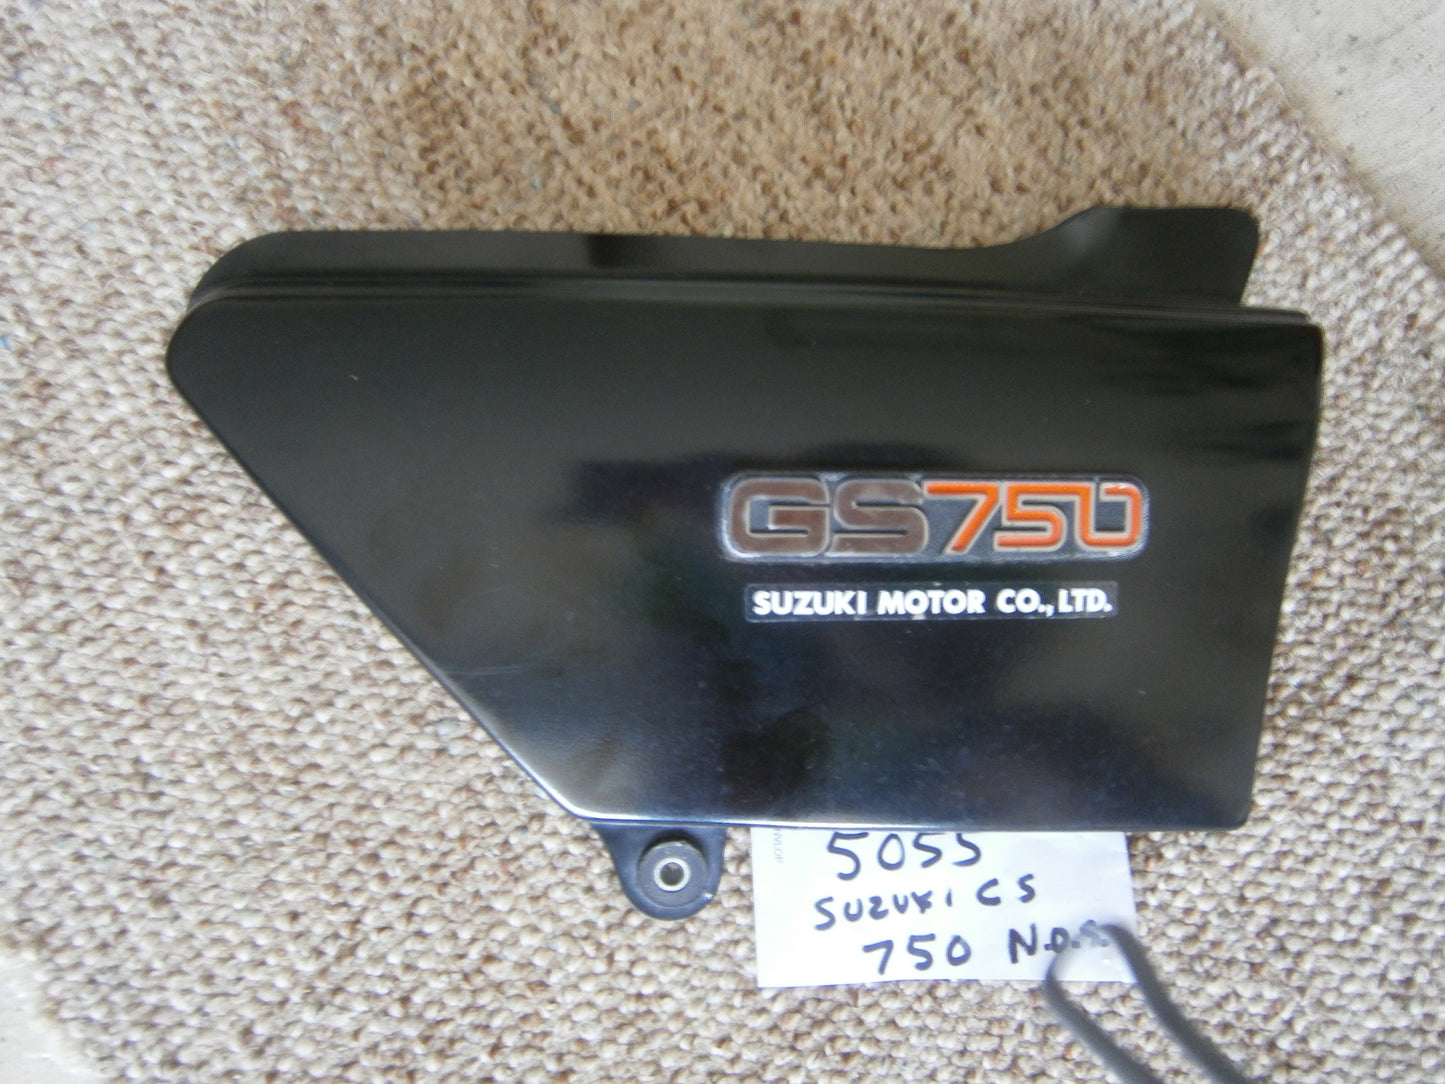 Suzuki GS750 Black  New Old Stock  right sidecover  47111-45000 R  sku 5055